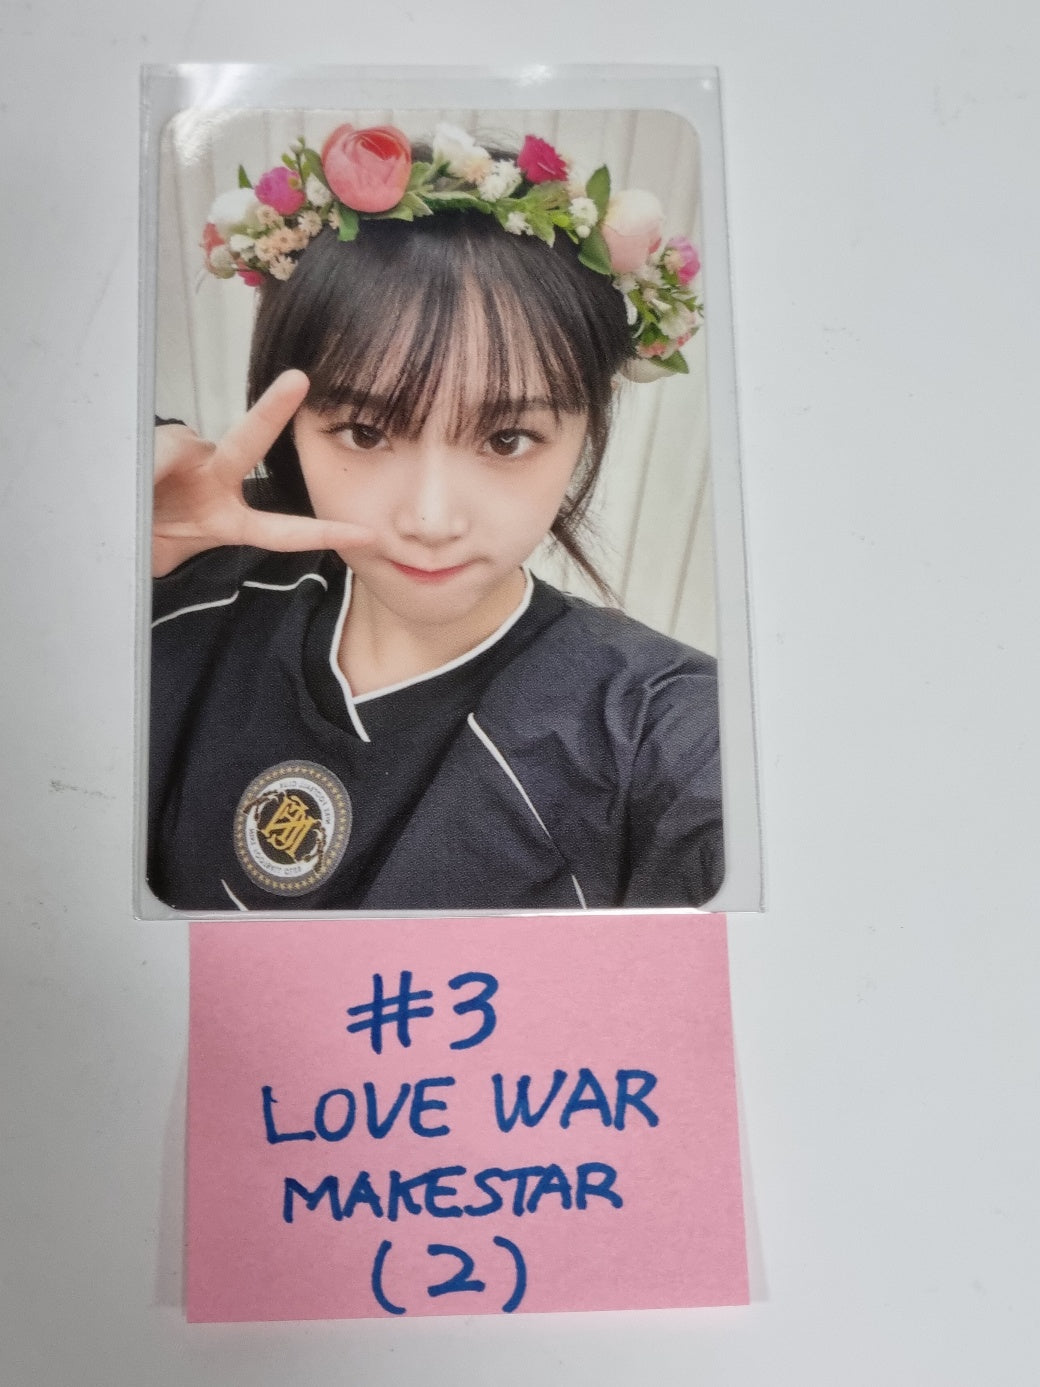 YENA「Love War」 - Makestar ファンサイン会フォトカード第 3 弾